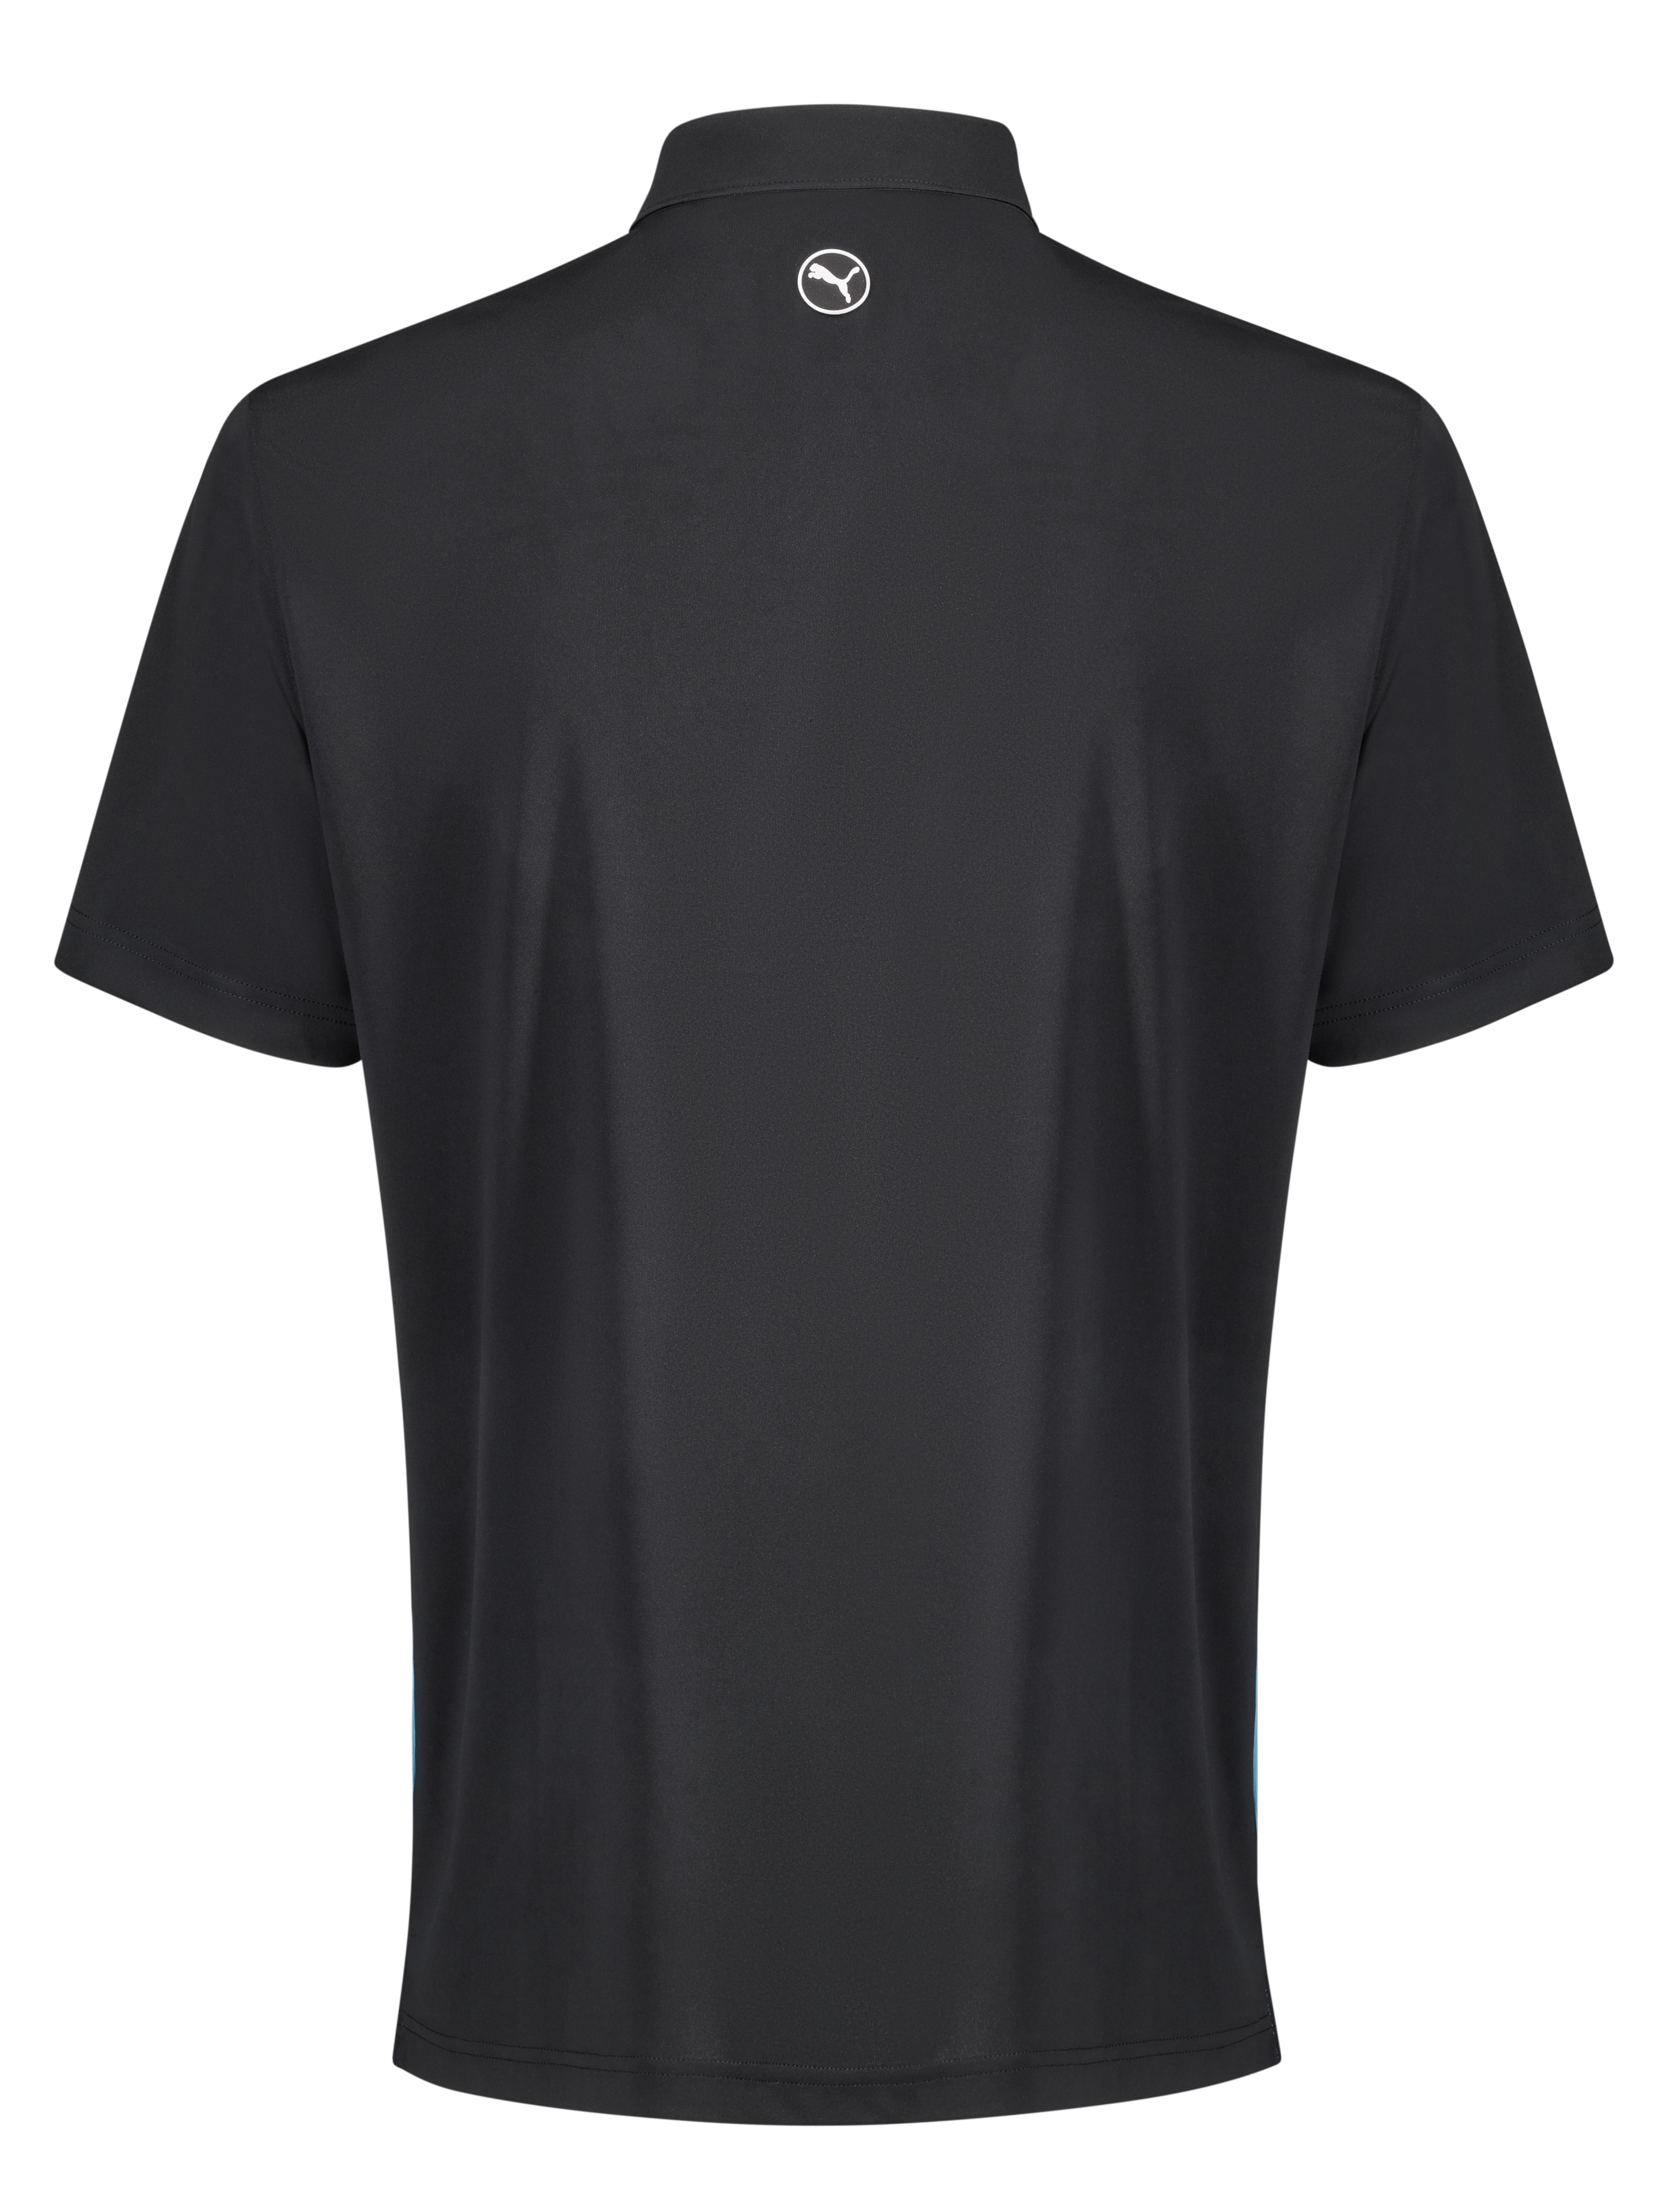 Golf-Poloshirt Herren, Pure Colorblock - black / Aqua Blue / white, S